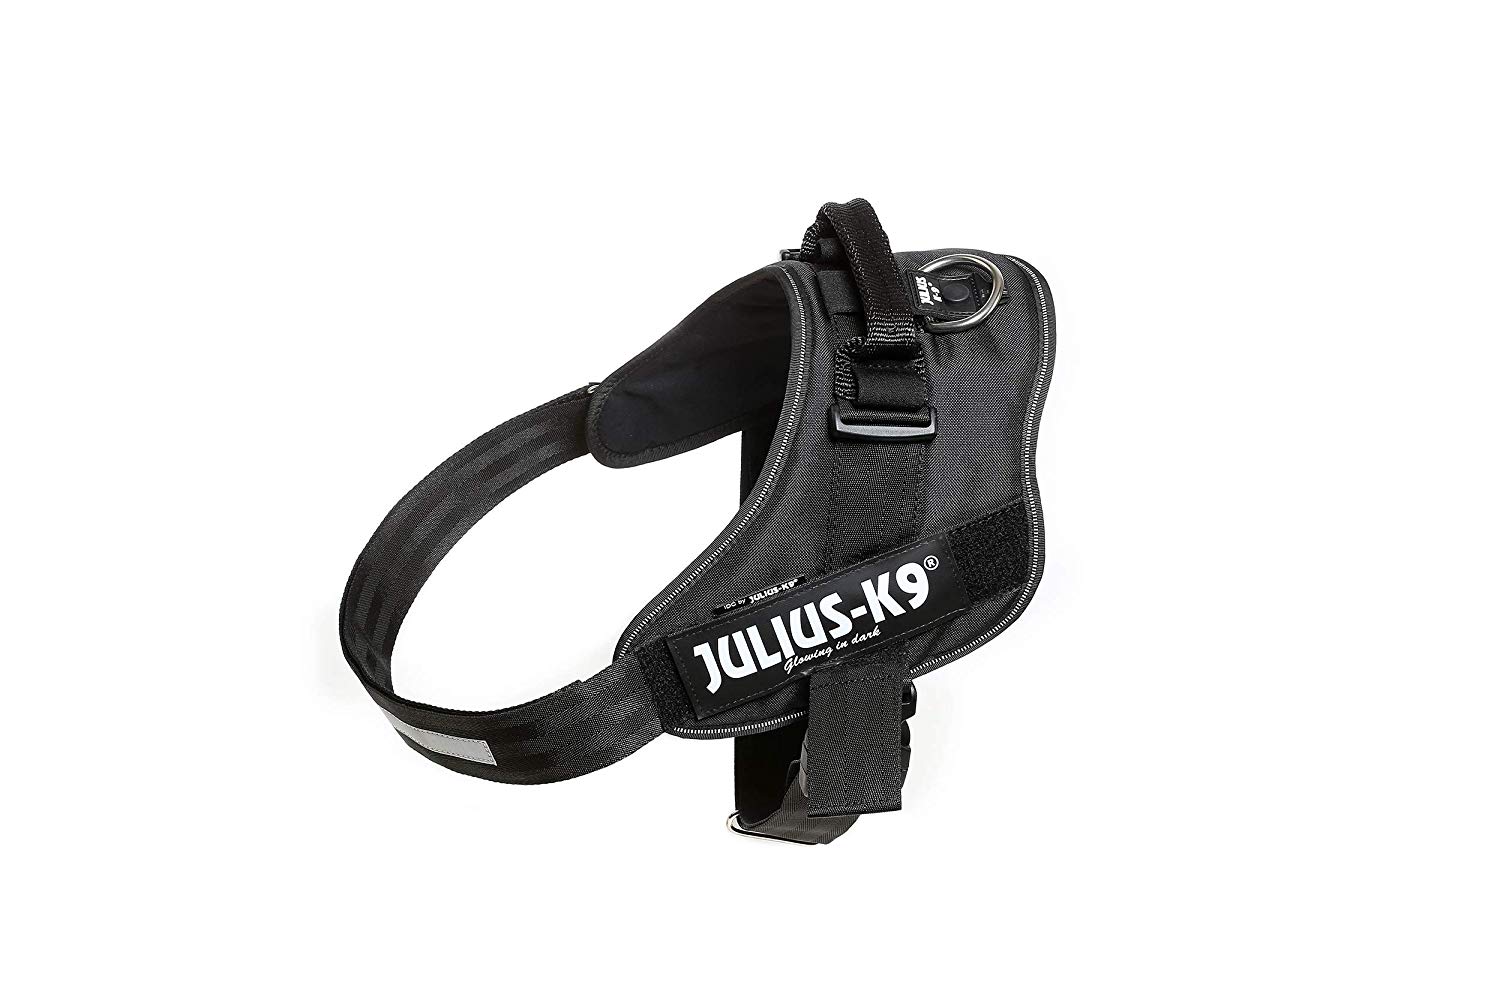 Julius-K9 IDC-Powerharness with K9 Security Lock, Size 4, Black